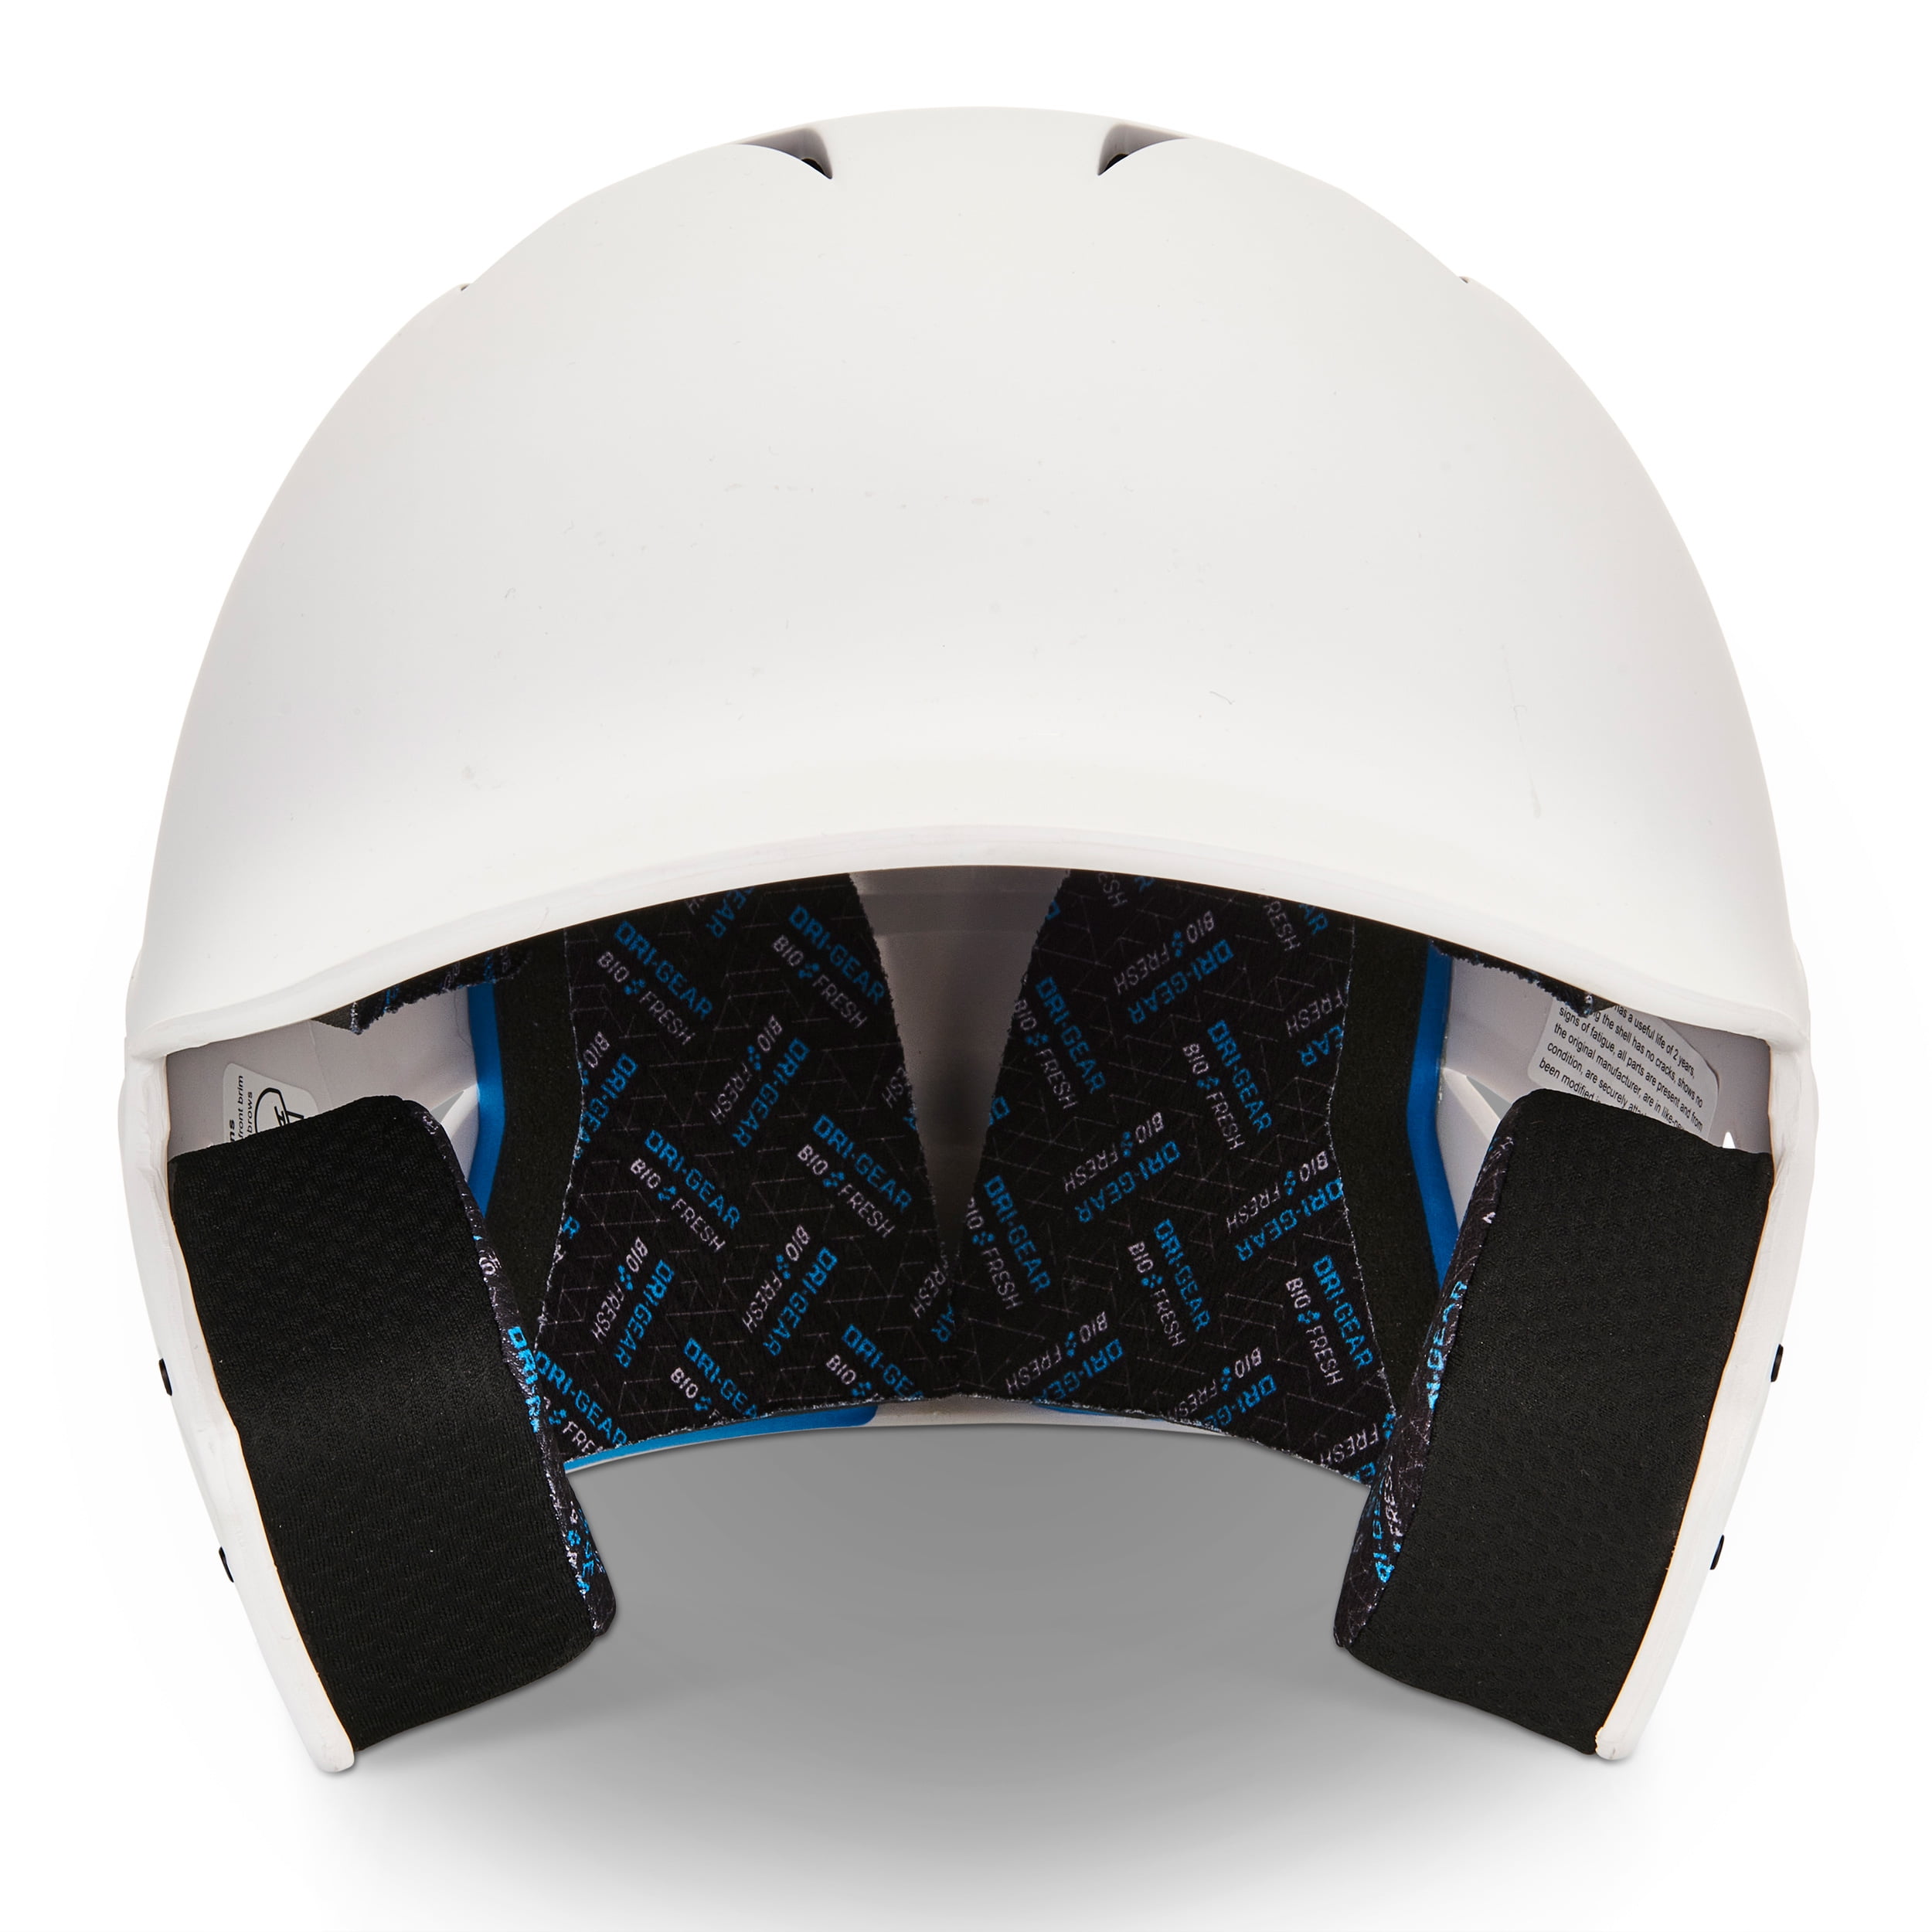 Champro Sports HX Helmet Pad Kit: HXPK – Prime Sports Midwest